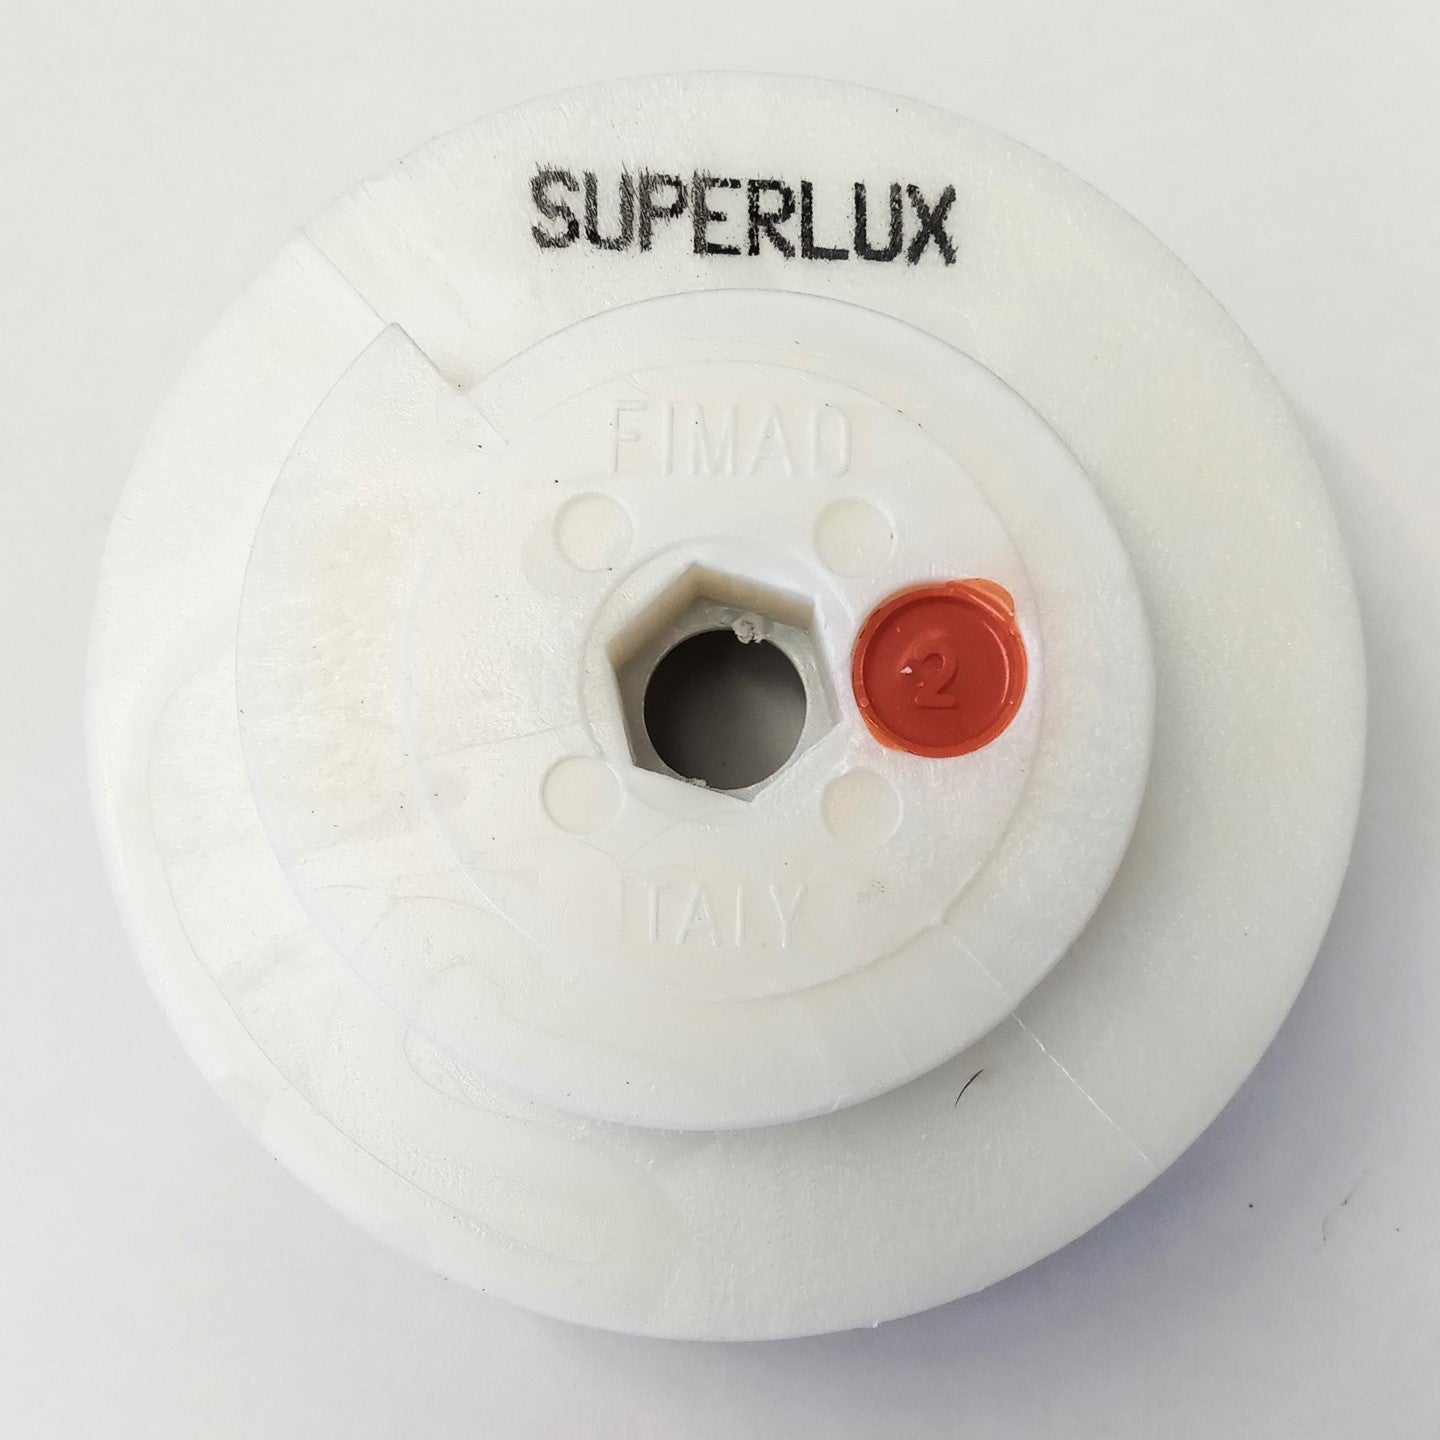 Fimad 6698 4" Super Lux POS.2 Polishing Wheel Italy